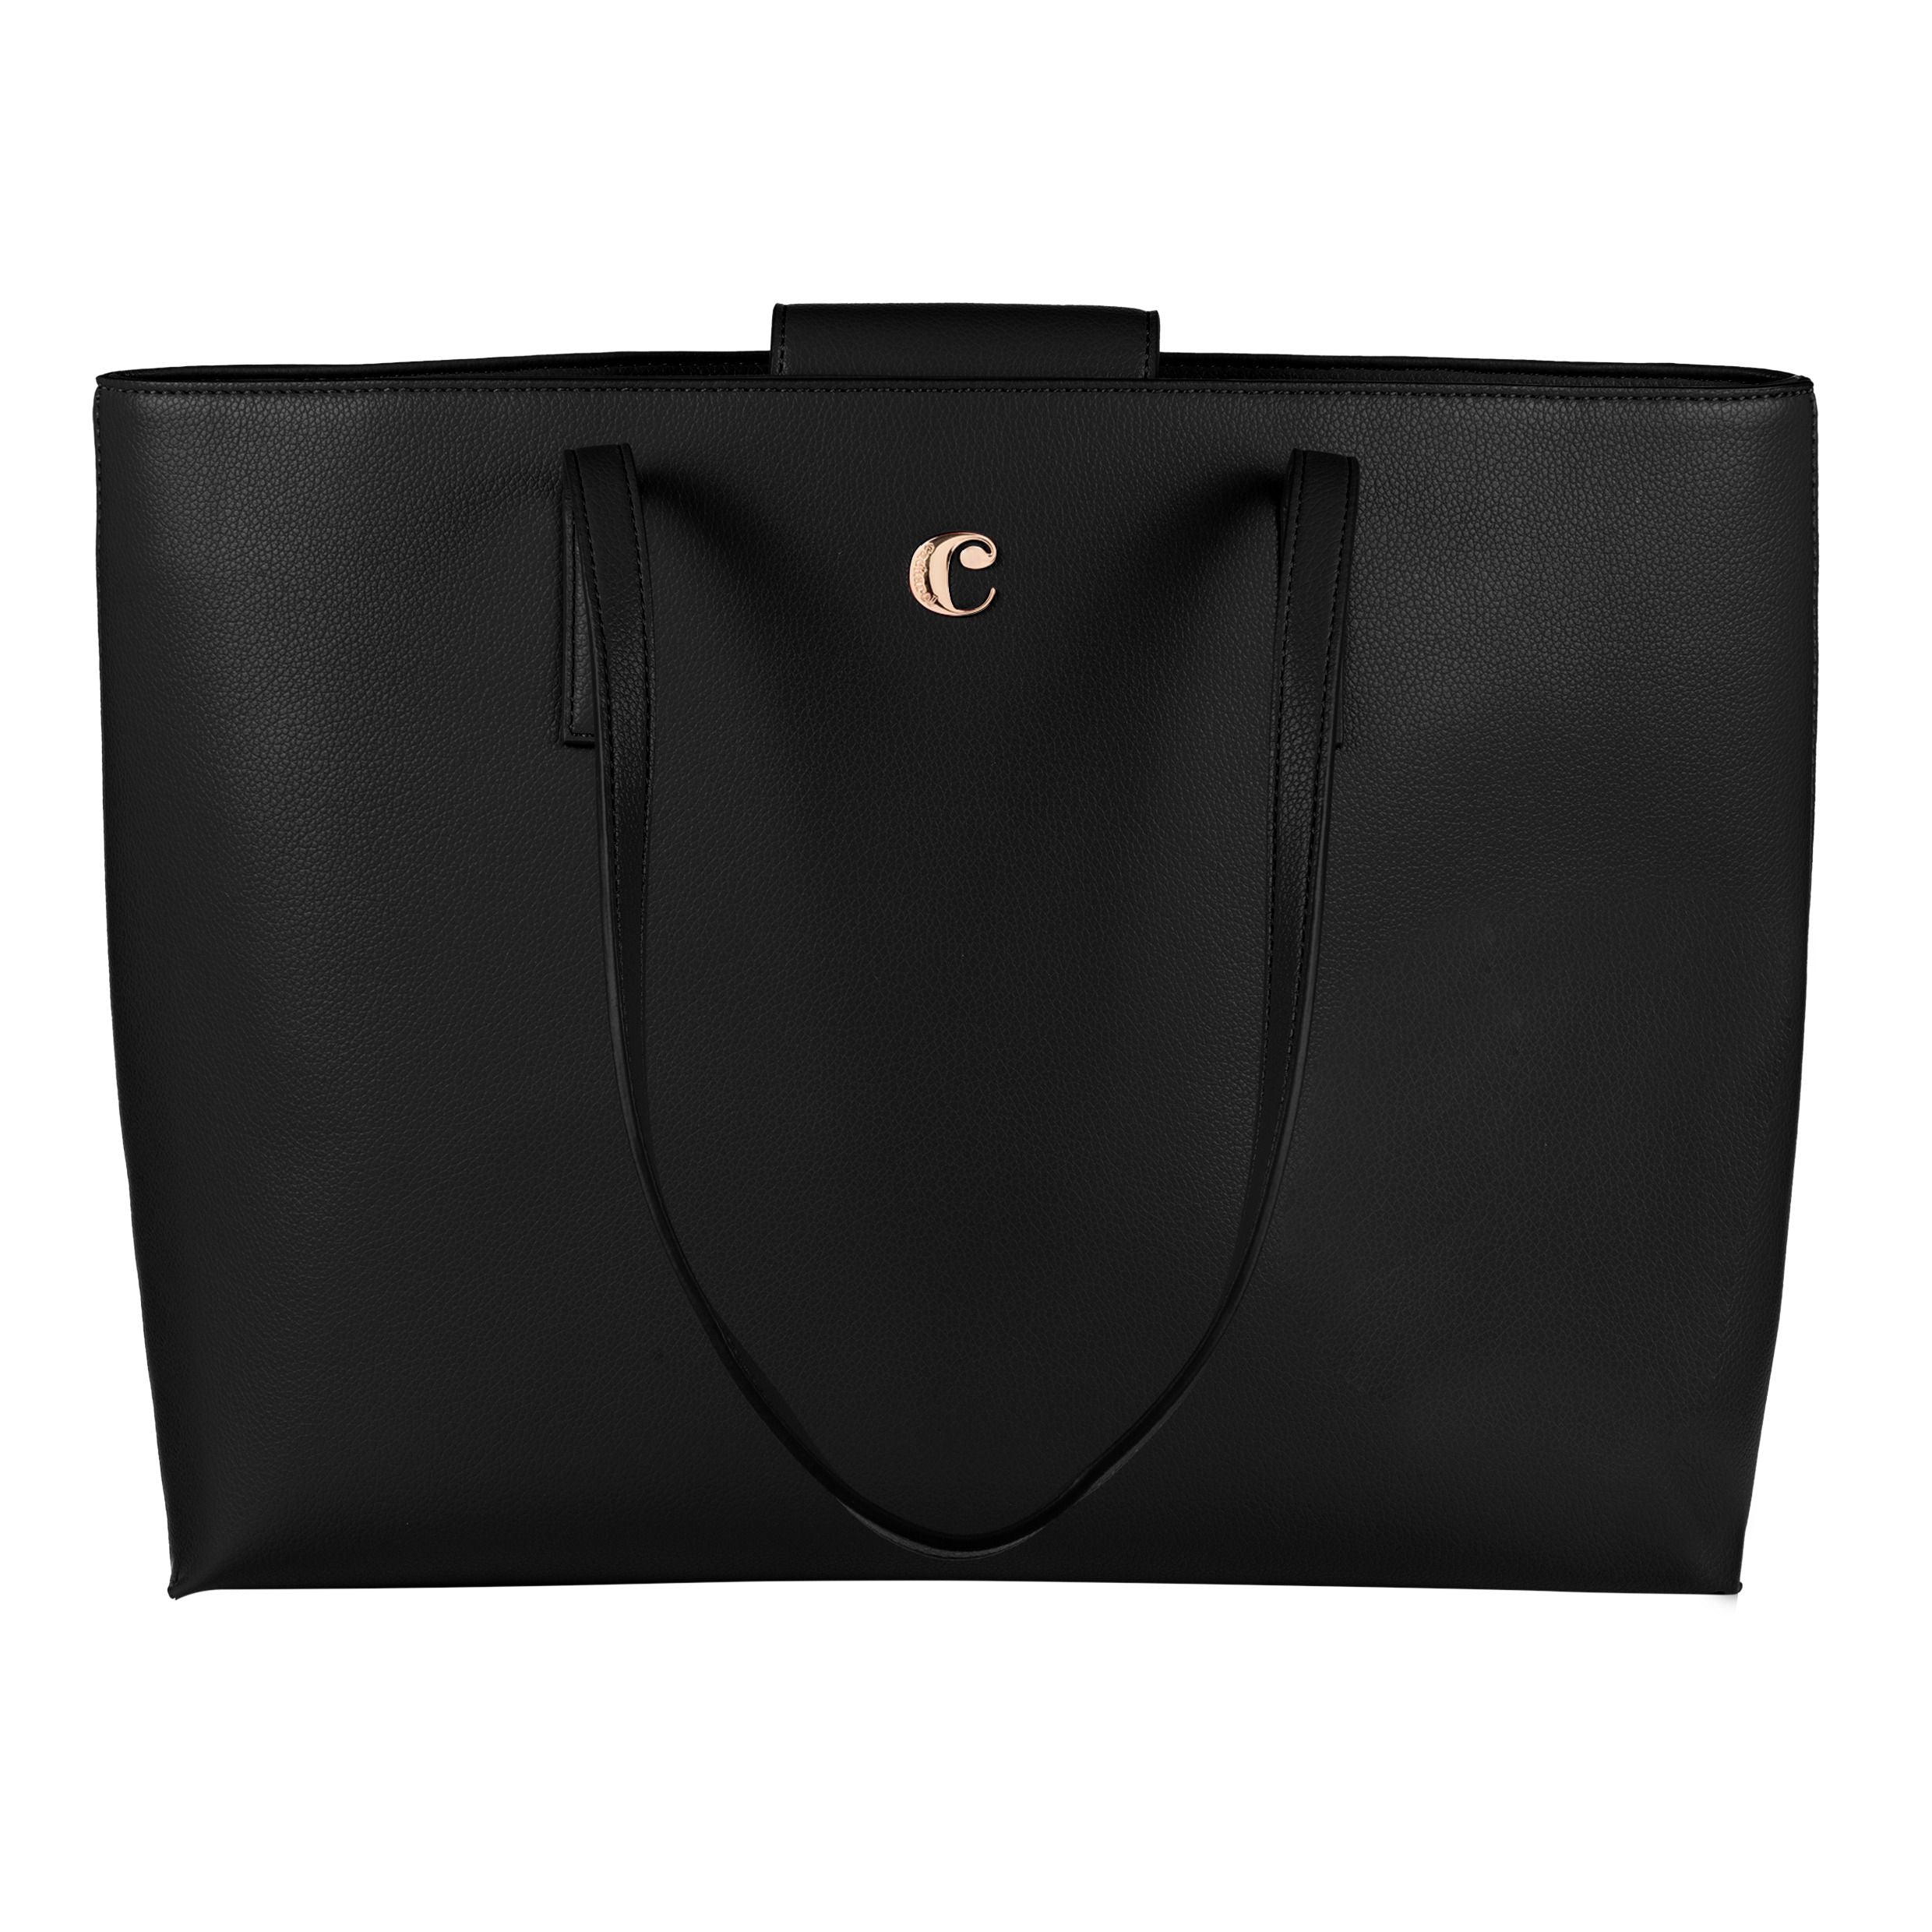 Lady bag Pompadour Noir CACHAREL - Reklamni materijal